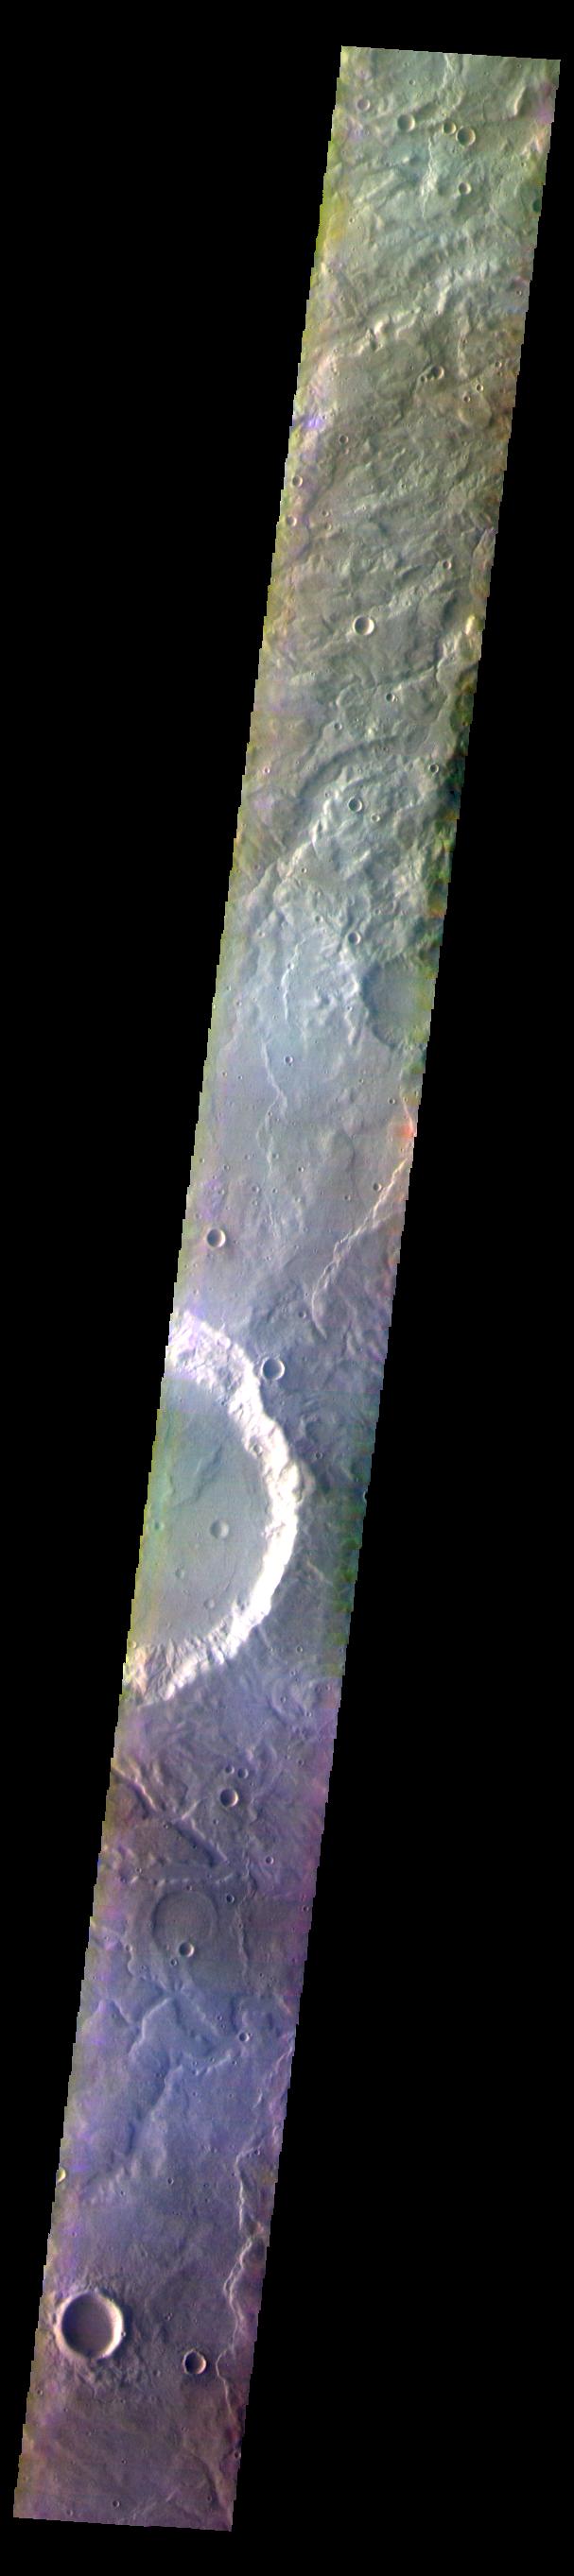 PIA22676: Terra Cimmeria - False Color